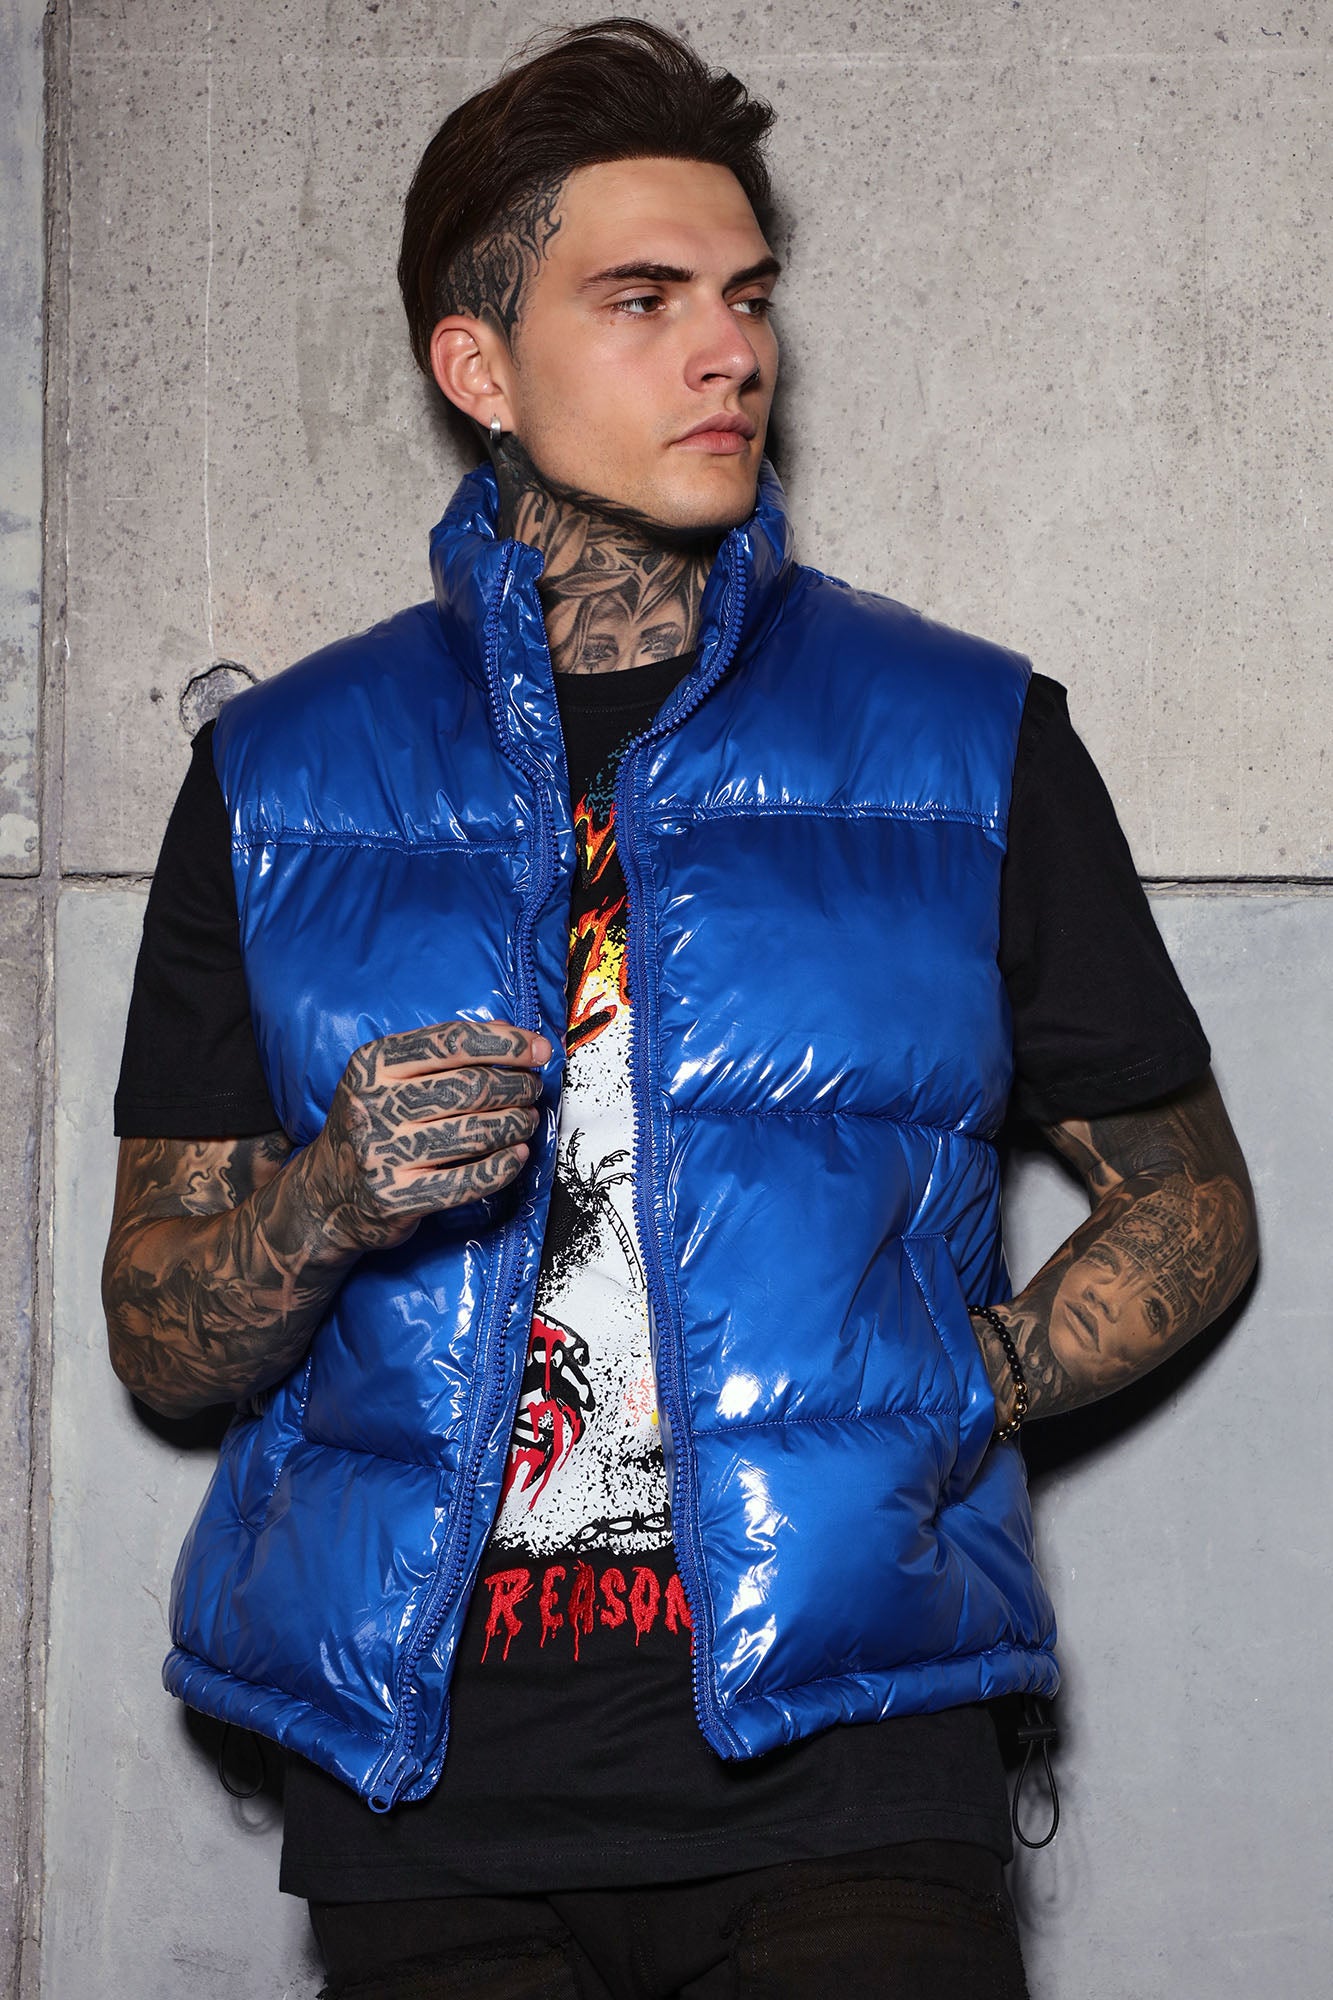 Caleb Puffer Vest - Blue, Fashion Nova, Mens Jackets